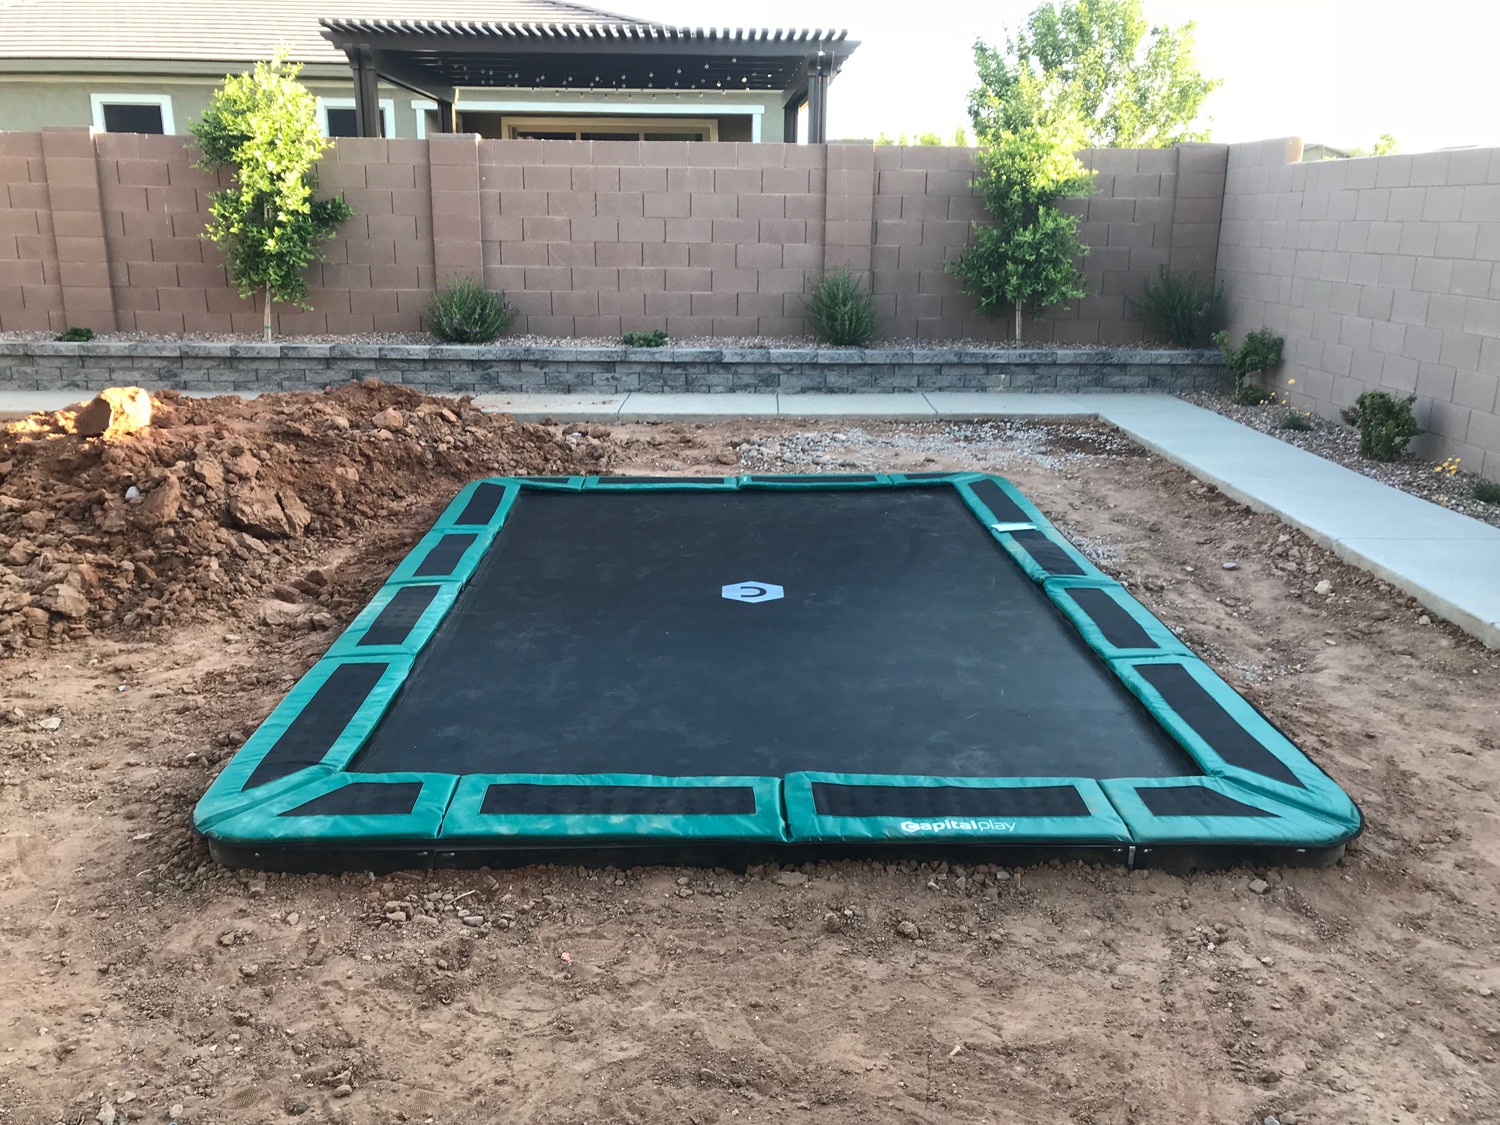 New in-ground trampoline installation company Arizona